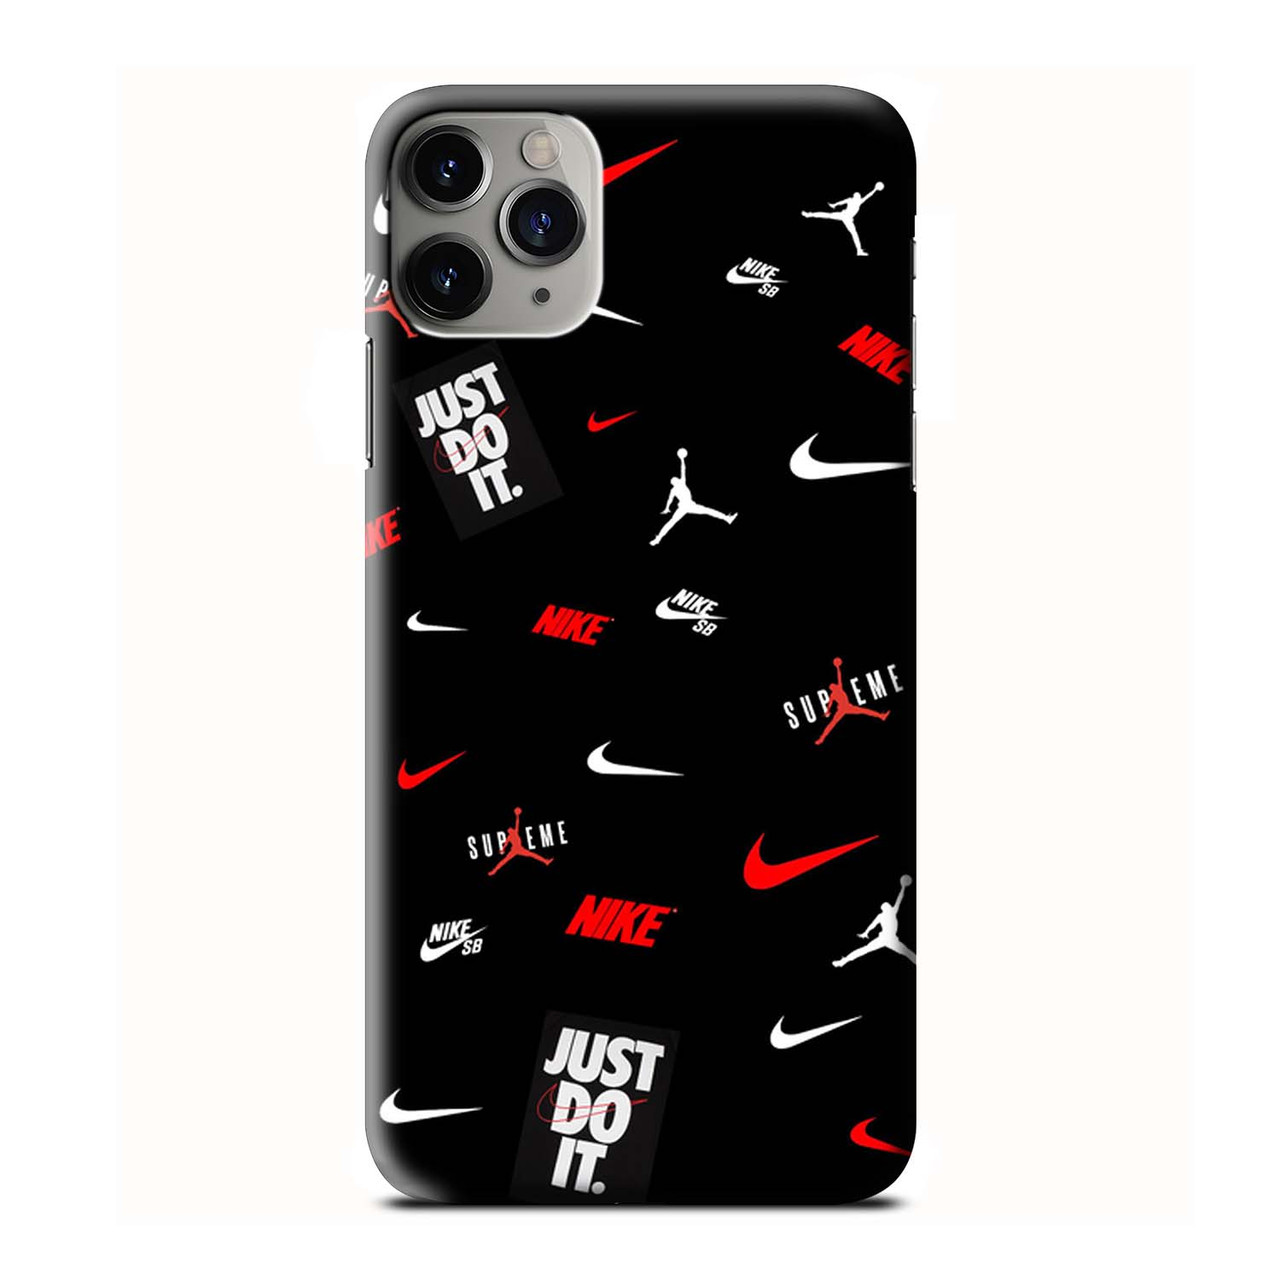 Air Jordan Nike Just Do It Iphone 3d Case Cover